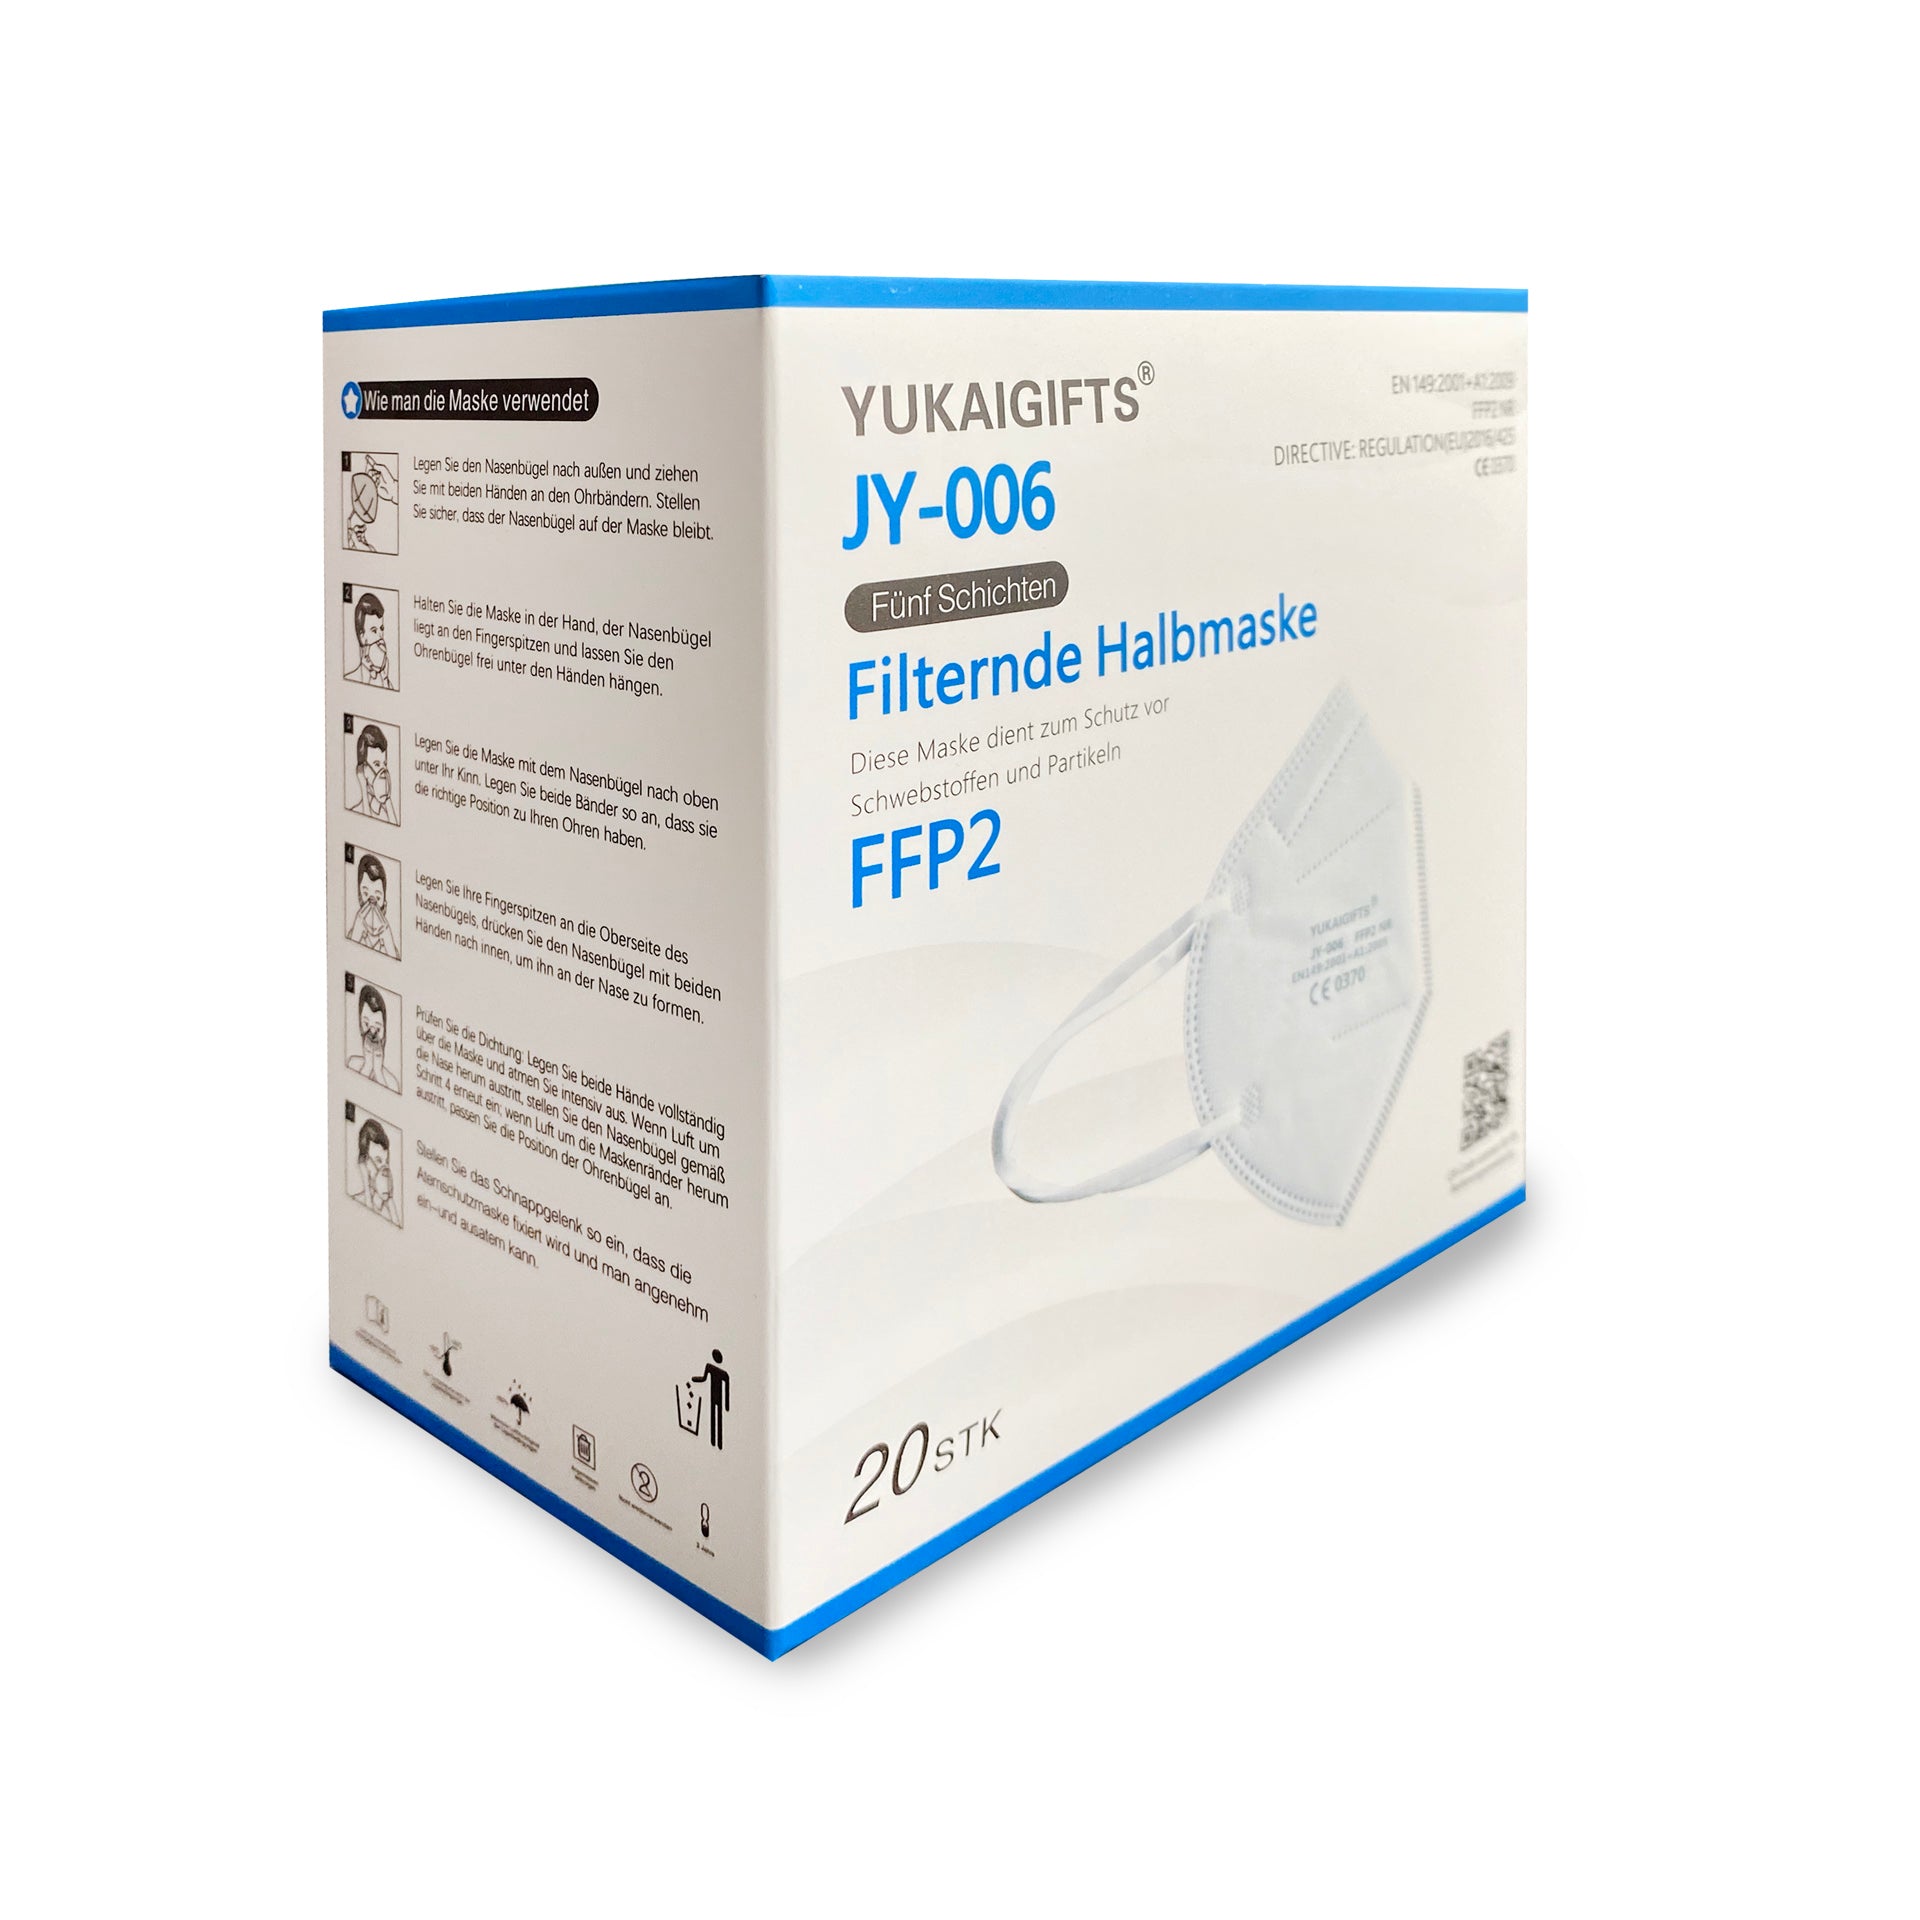 FFP2 Schutzmaske CE0370 - medcare24